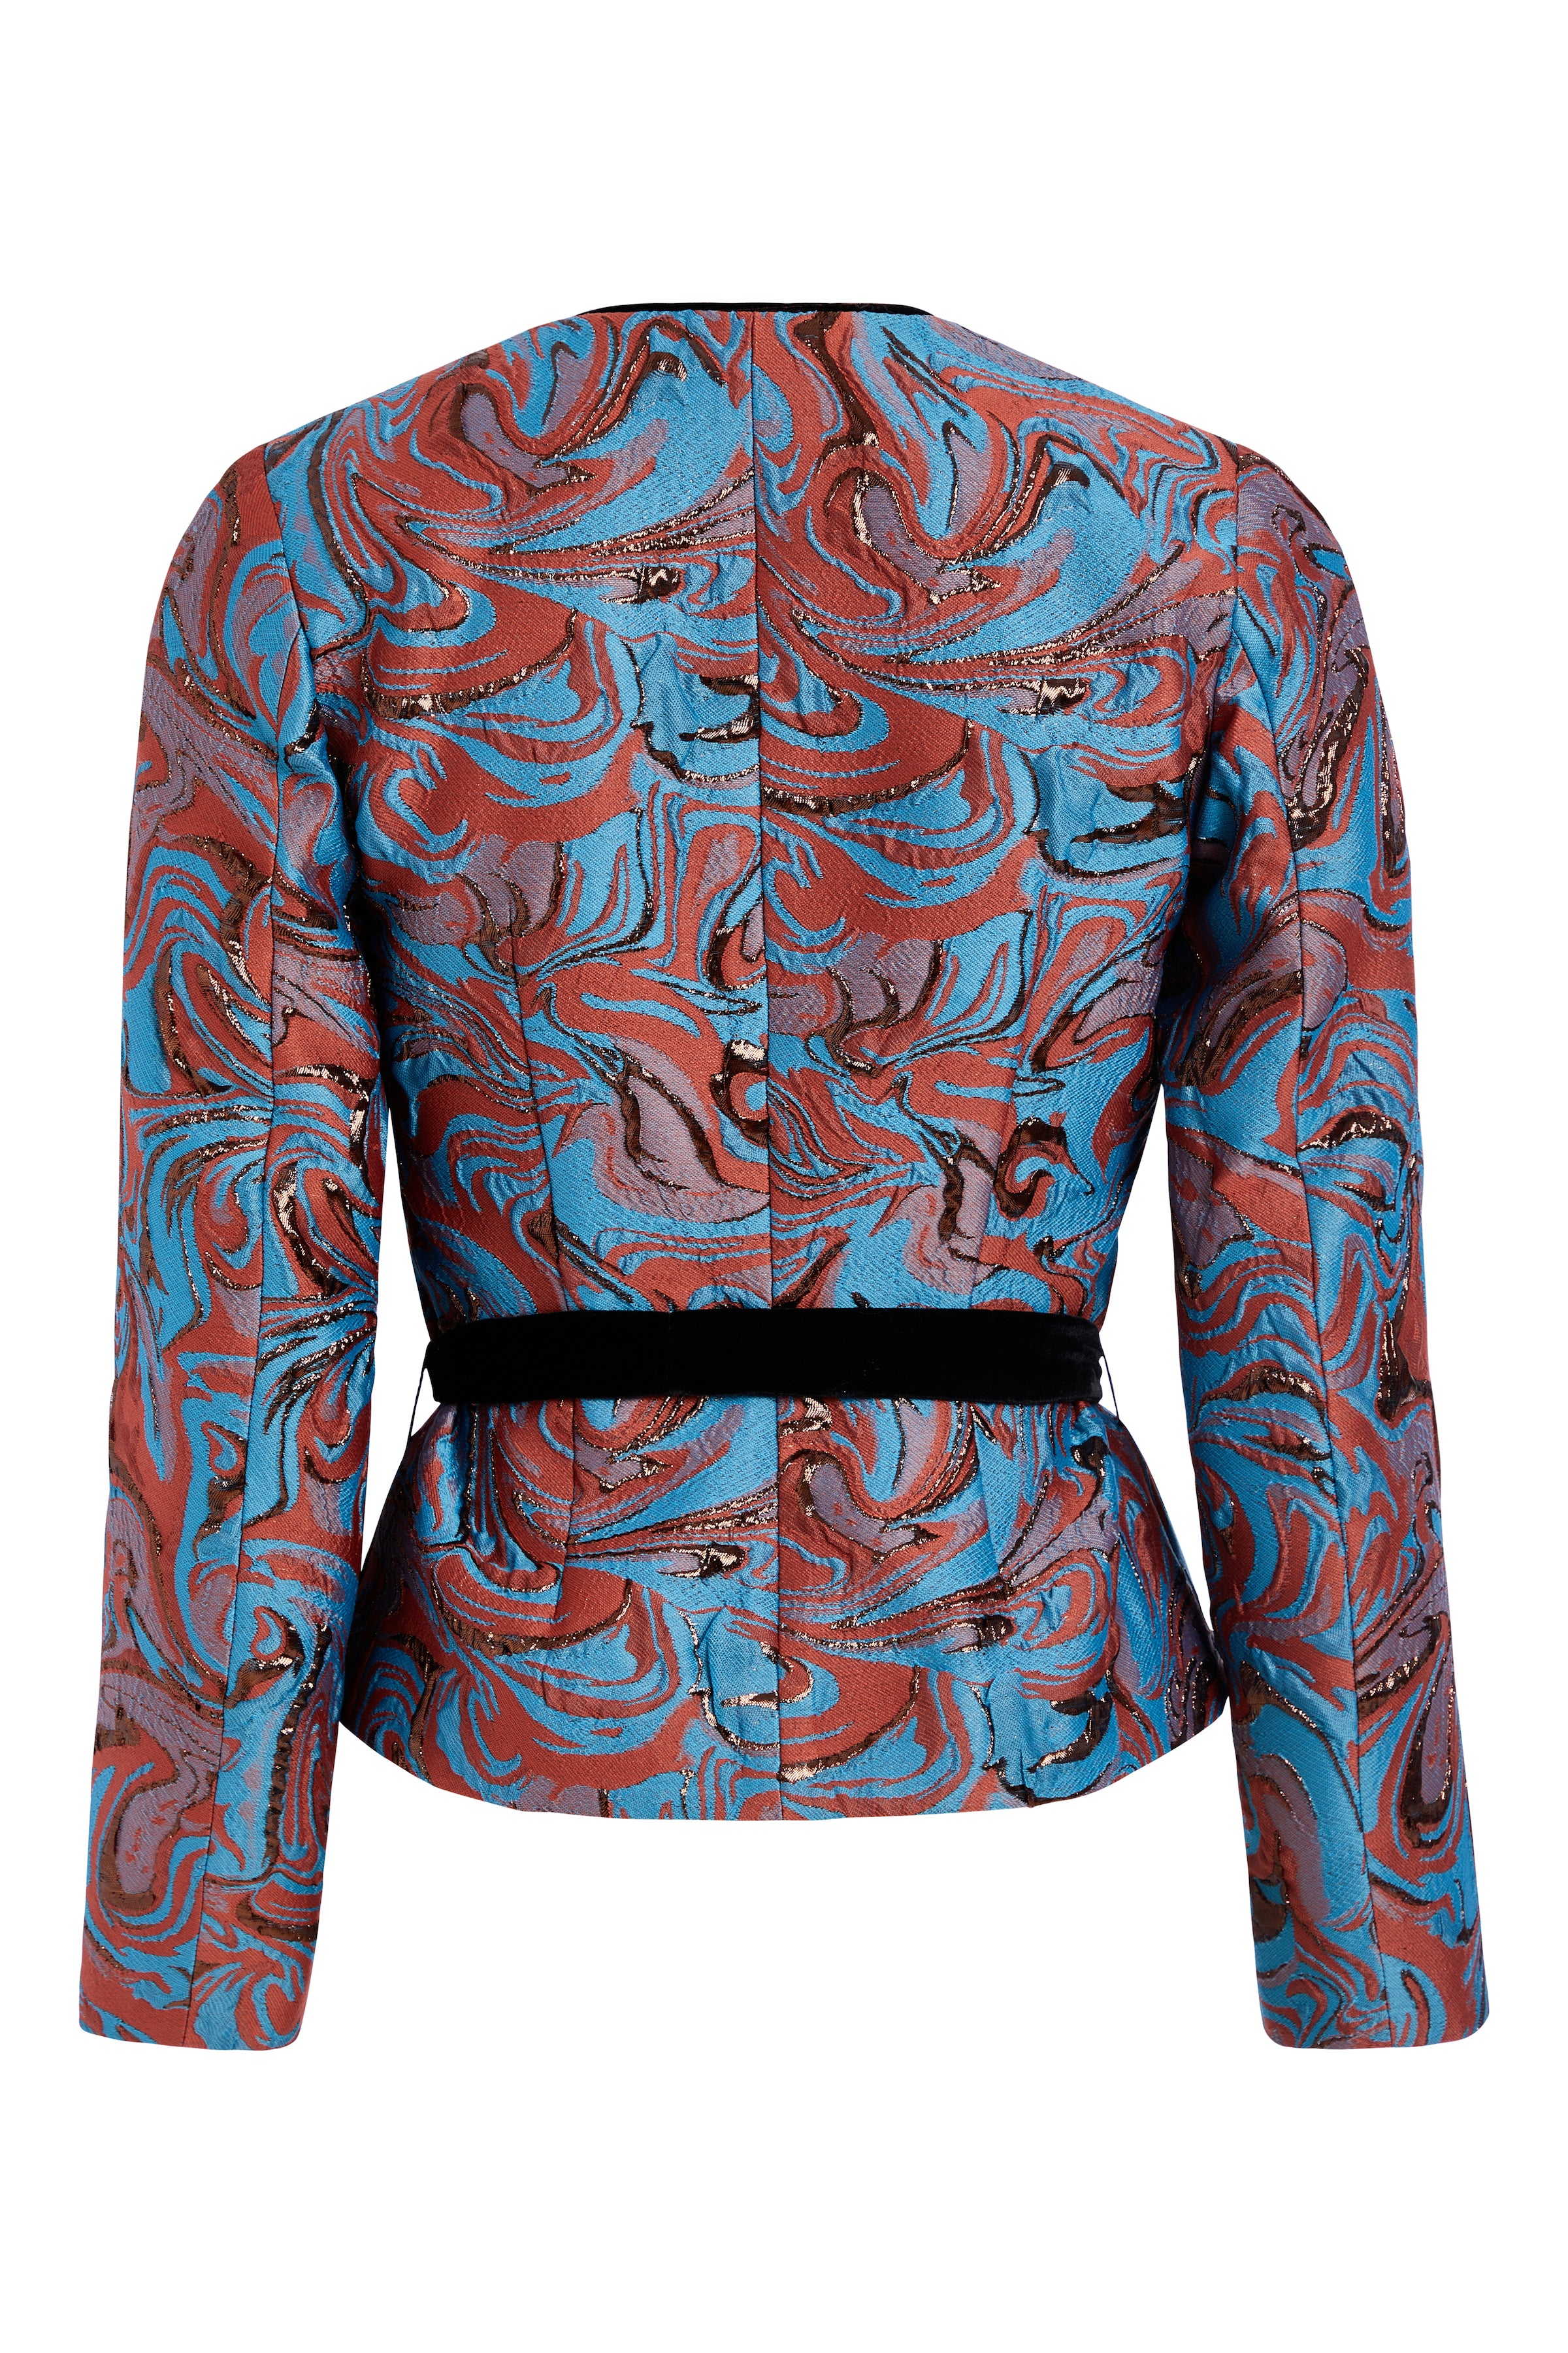 Chital Swirl Brocade Jacket